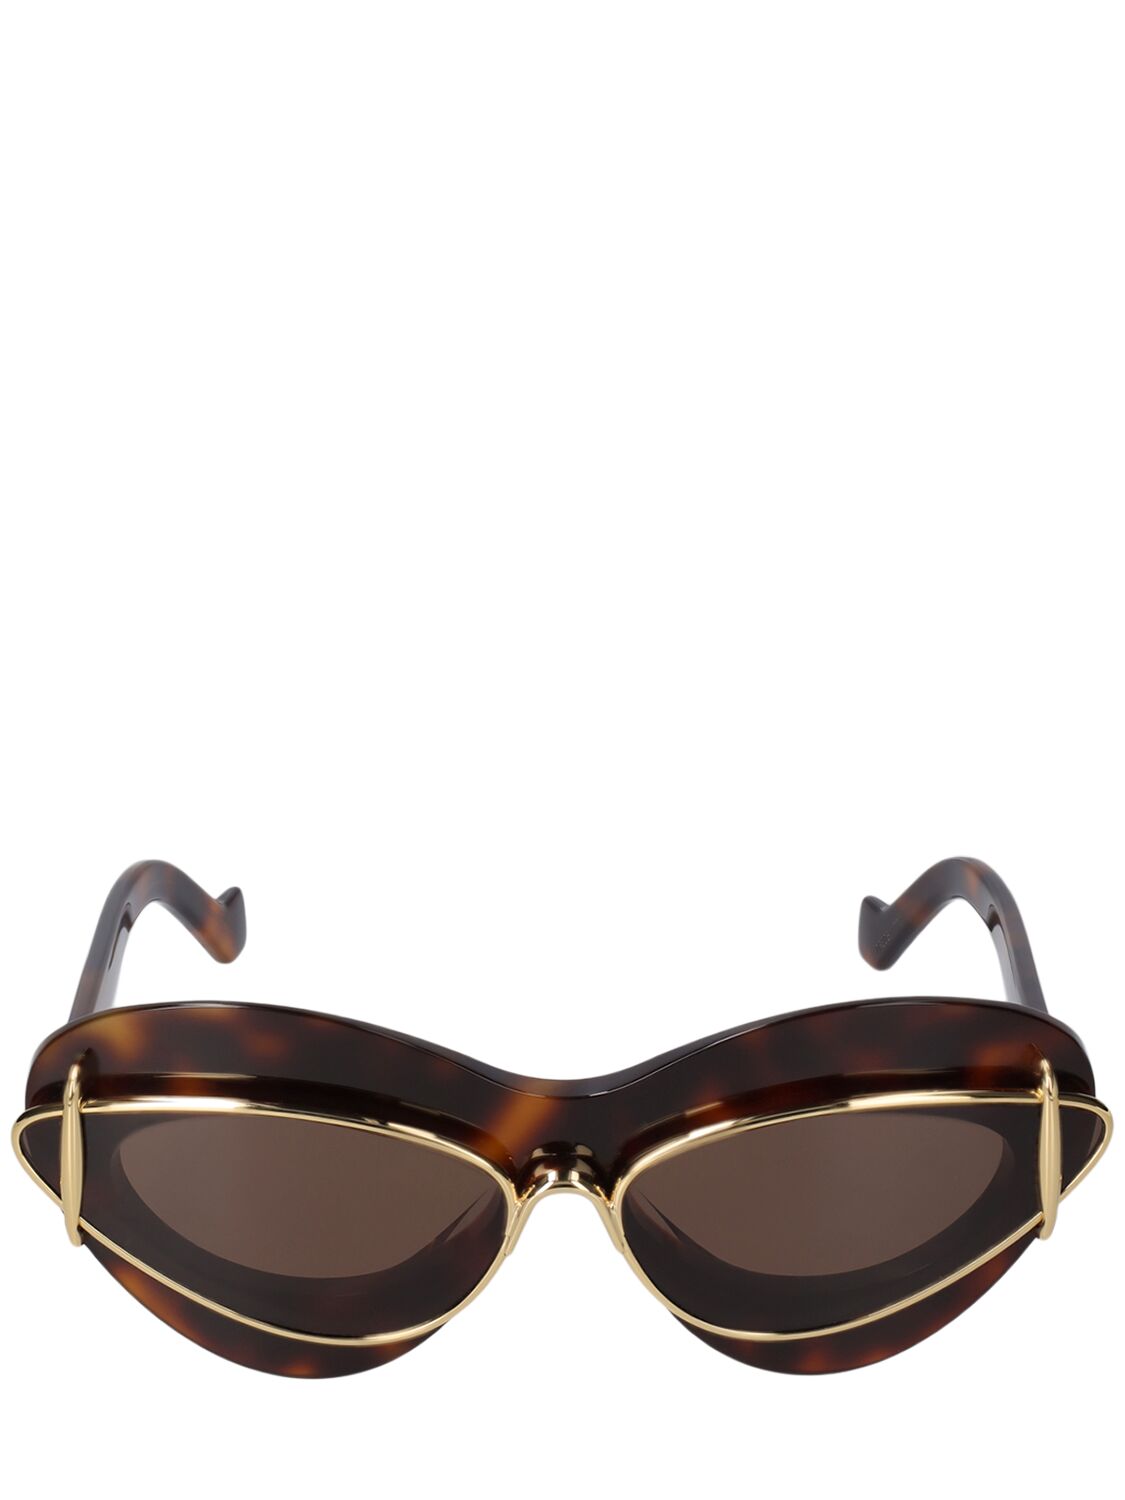 Image of Double Frame Acetate Sunglasses